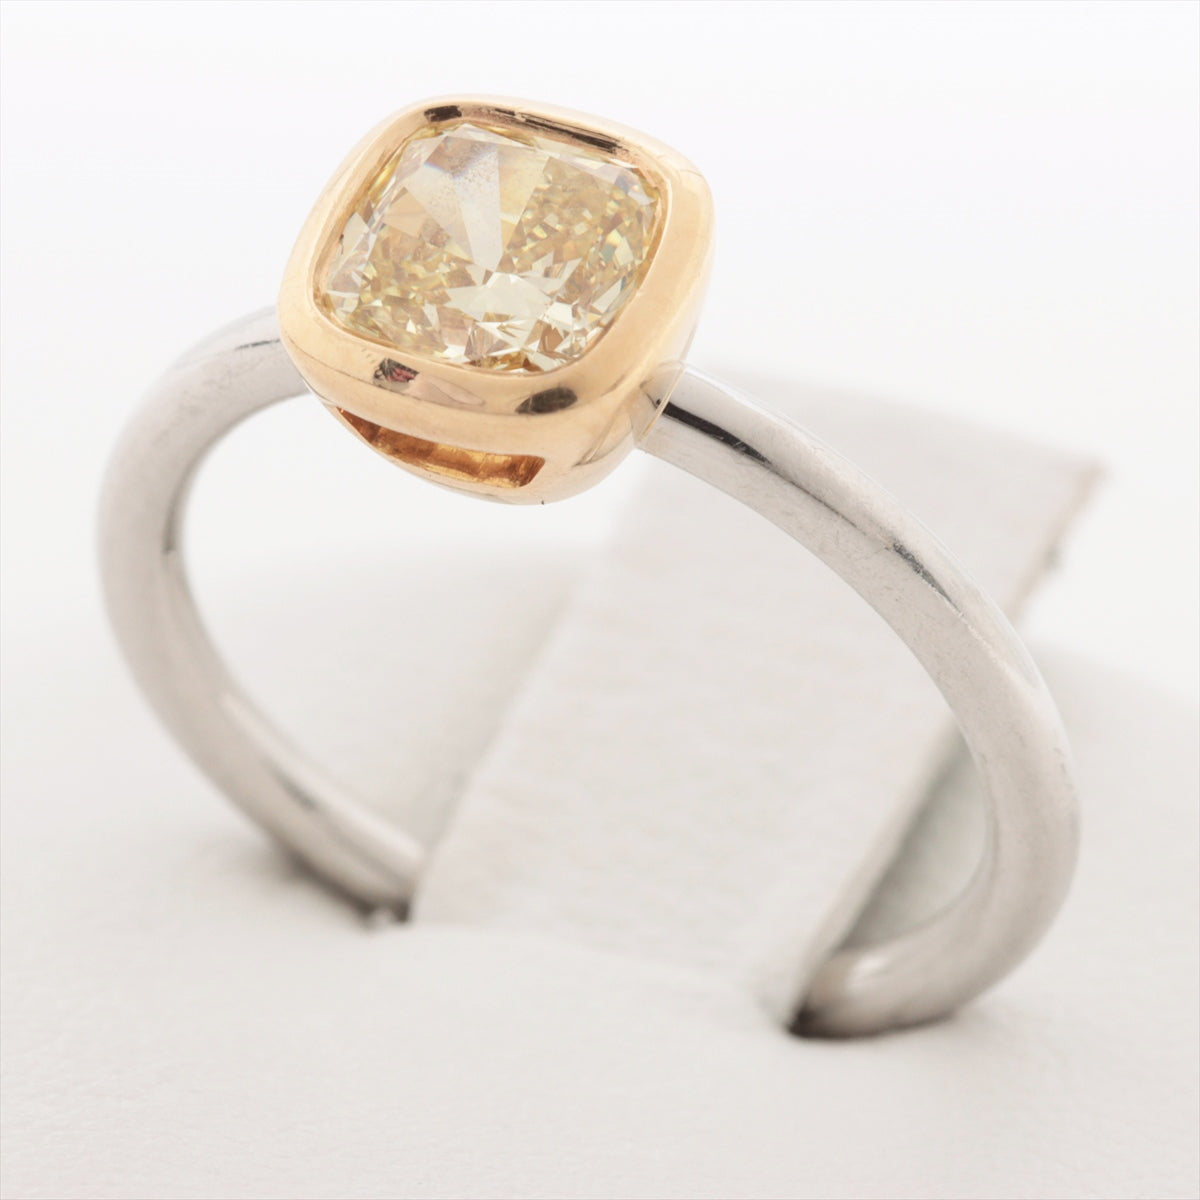 Tiffany Bezet Yellow diamond rings 750(YG)×Pt950 3.4g 1.01 FAINT YELLOW VS1 Cushion MB